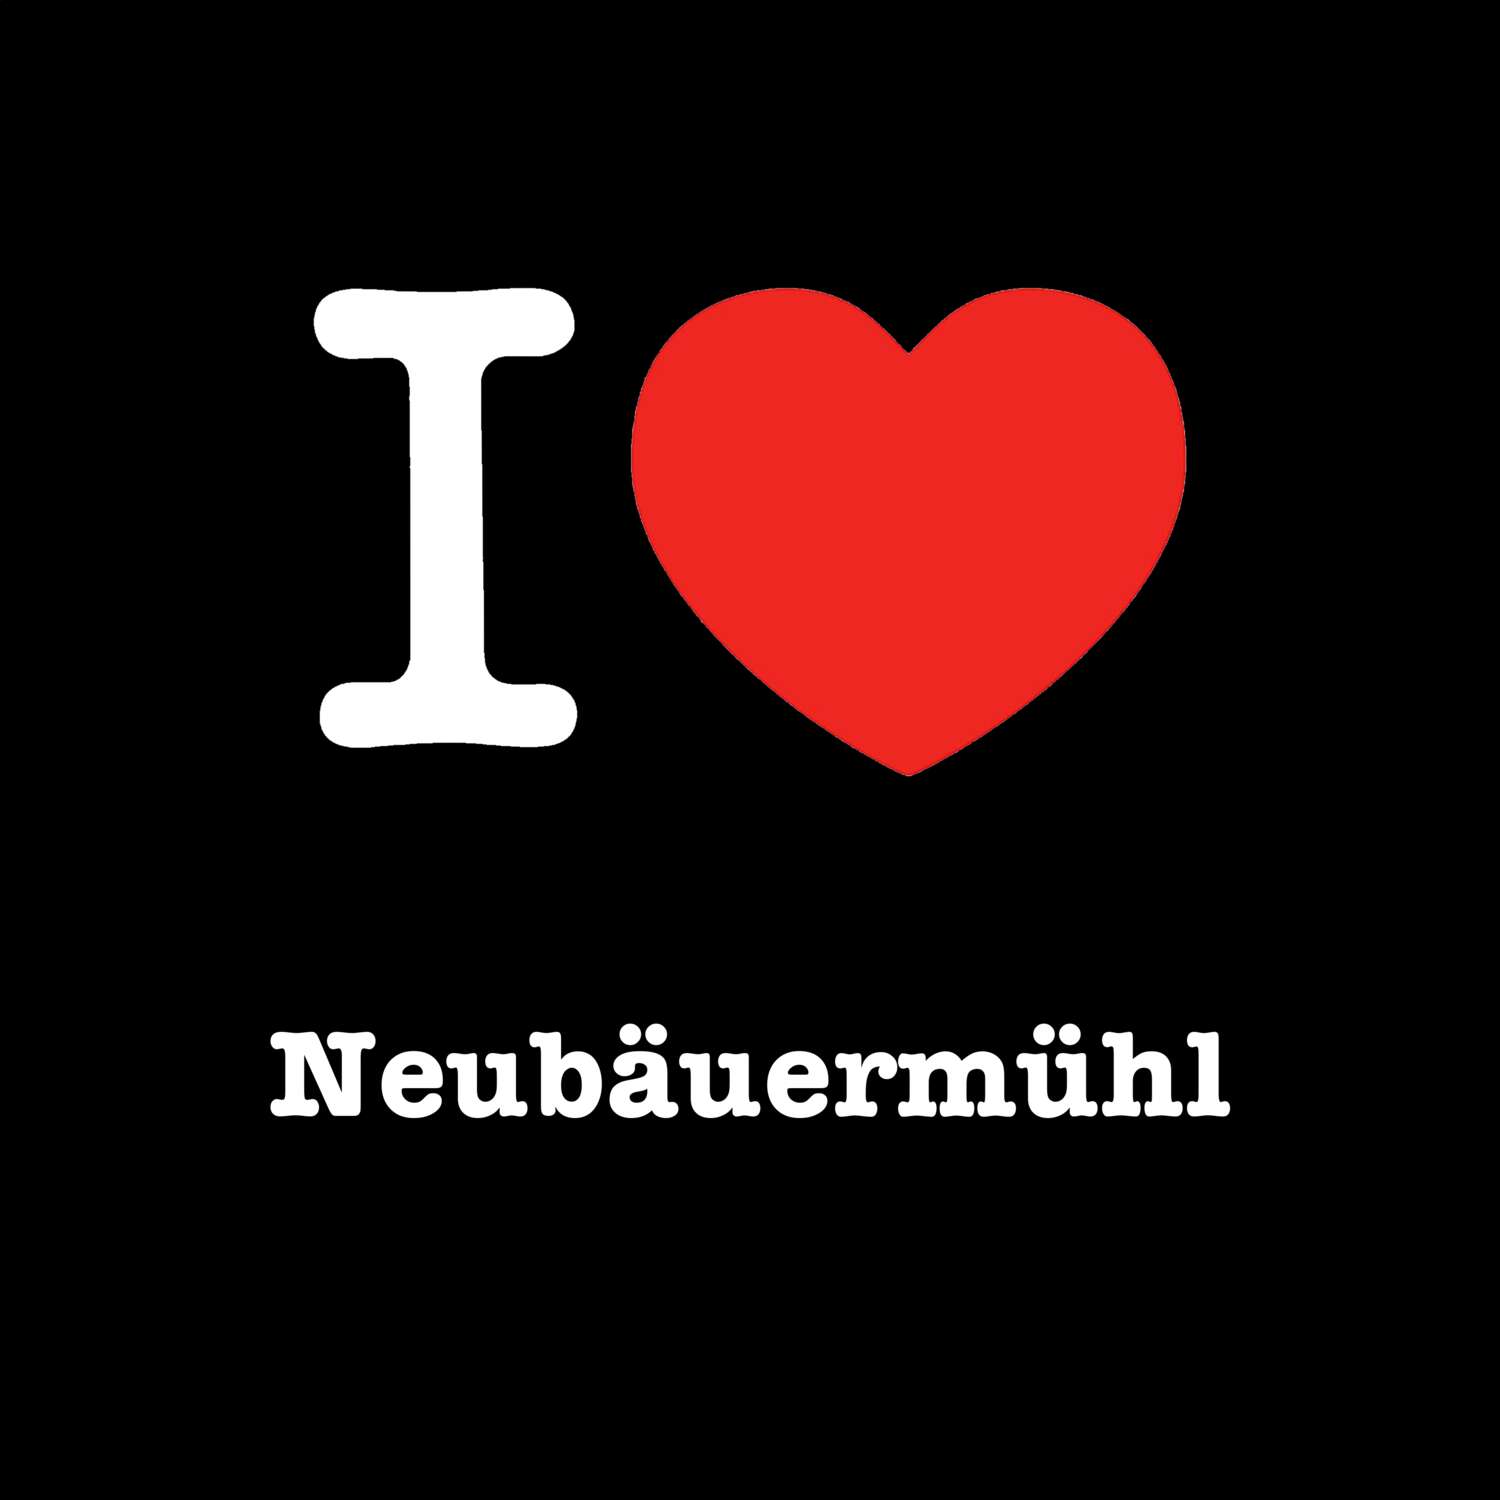 Neubäuermühl T-Shirt »I love«